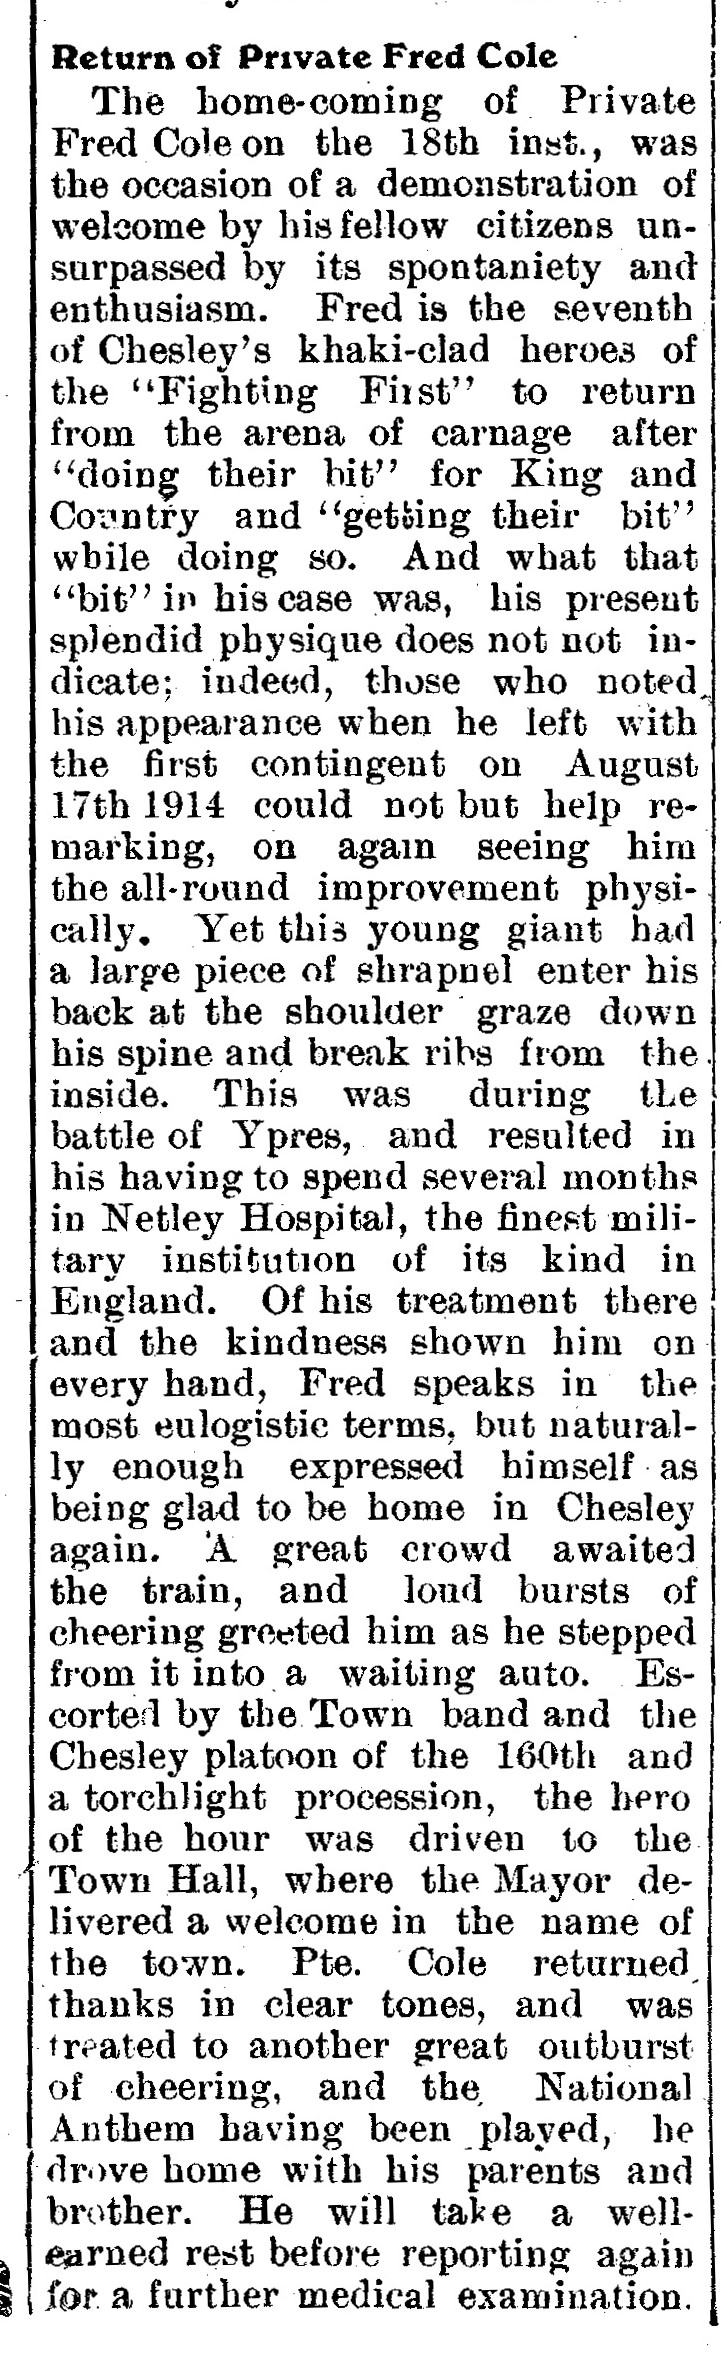 The Chesley Enterprise, April 27, 1916